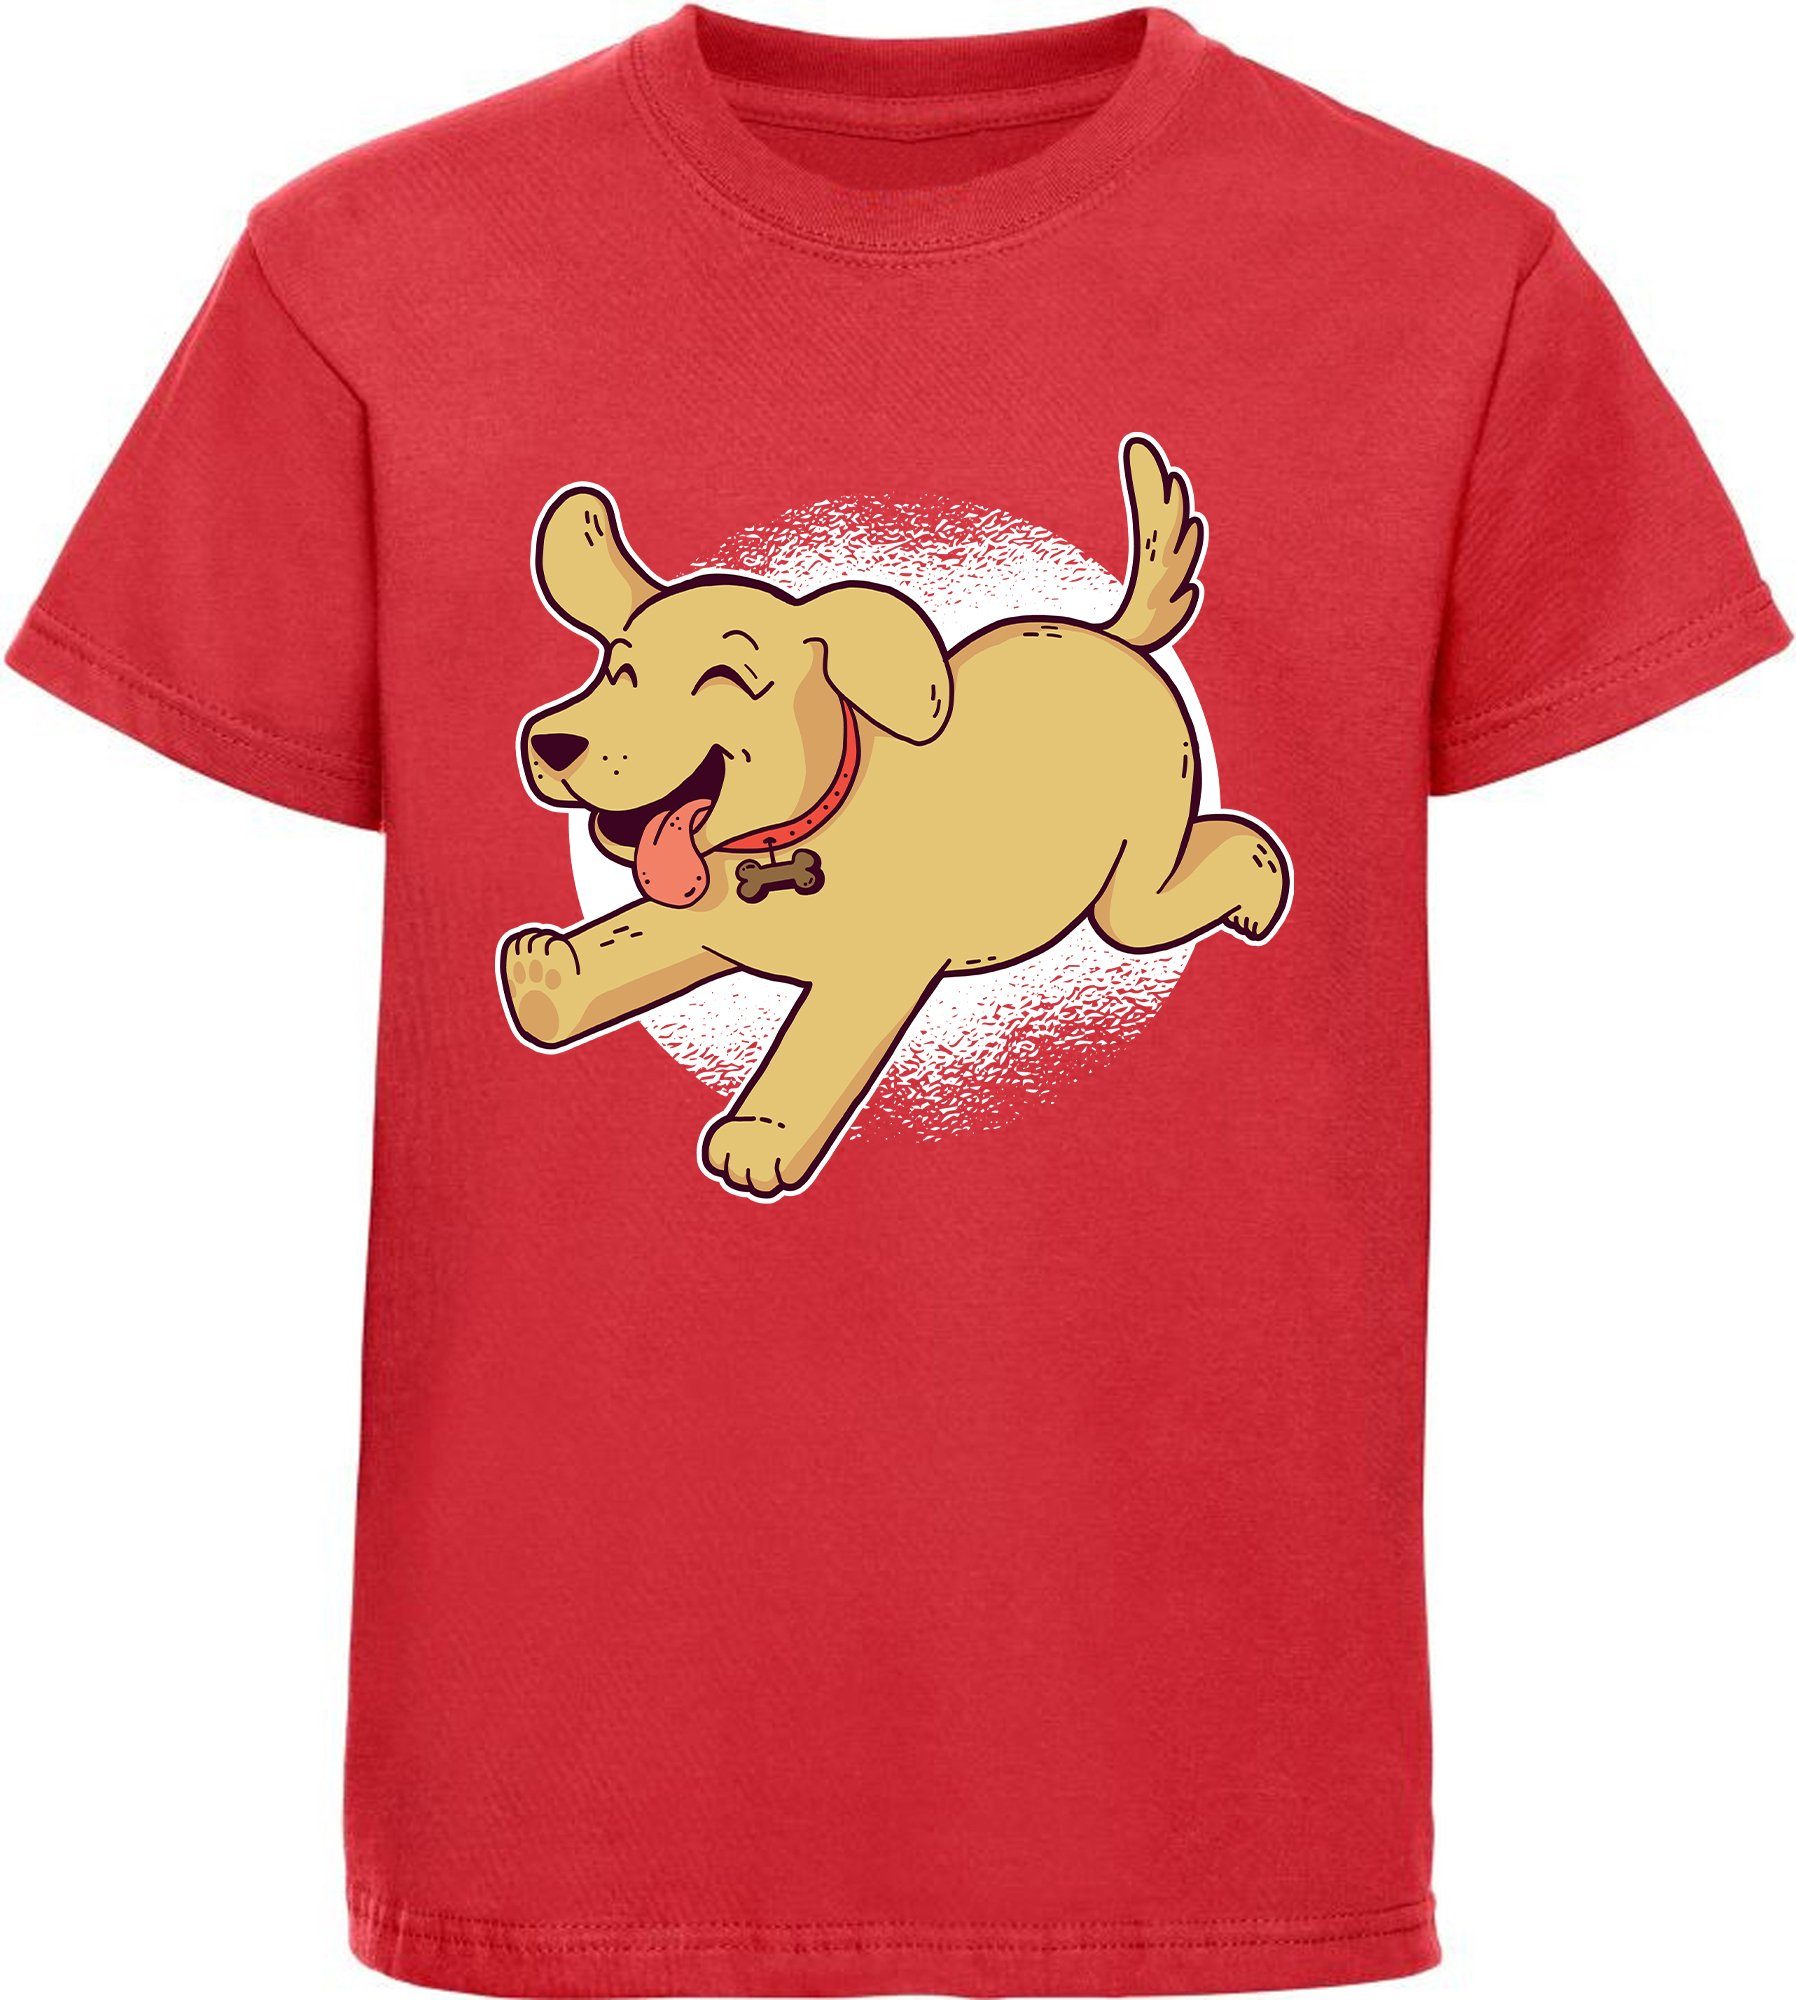 MyDesign24 T-Shirt Kinder mit i248 rot Shirt Print - Labrador Spielender Aufdruck, Hunde bedruckt Baumwollshirt Welpe